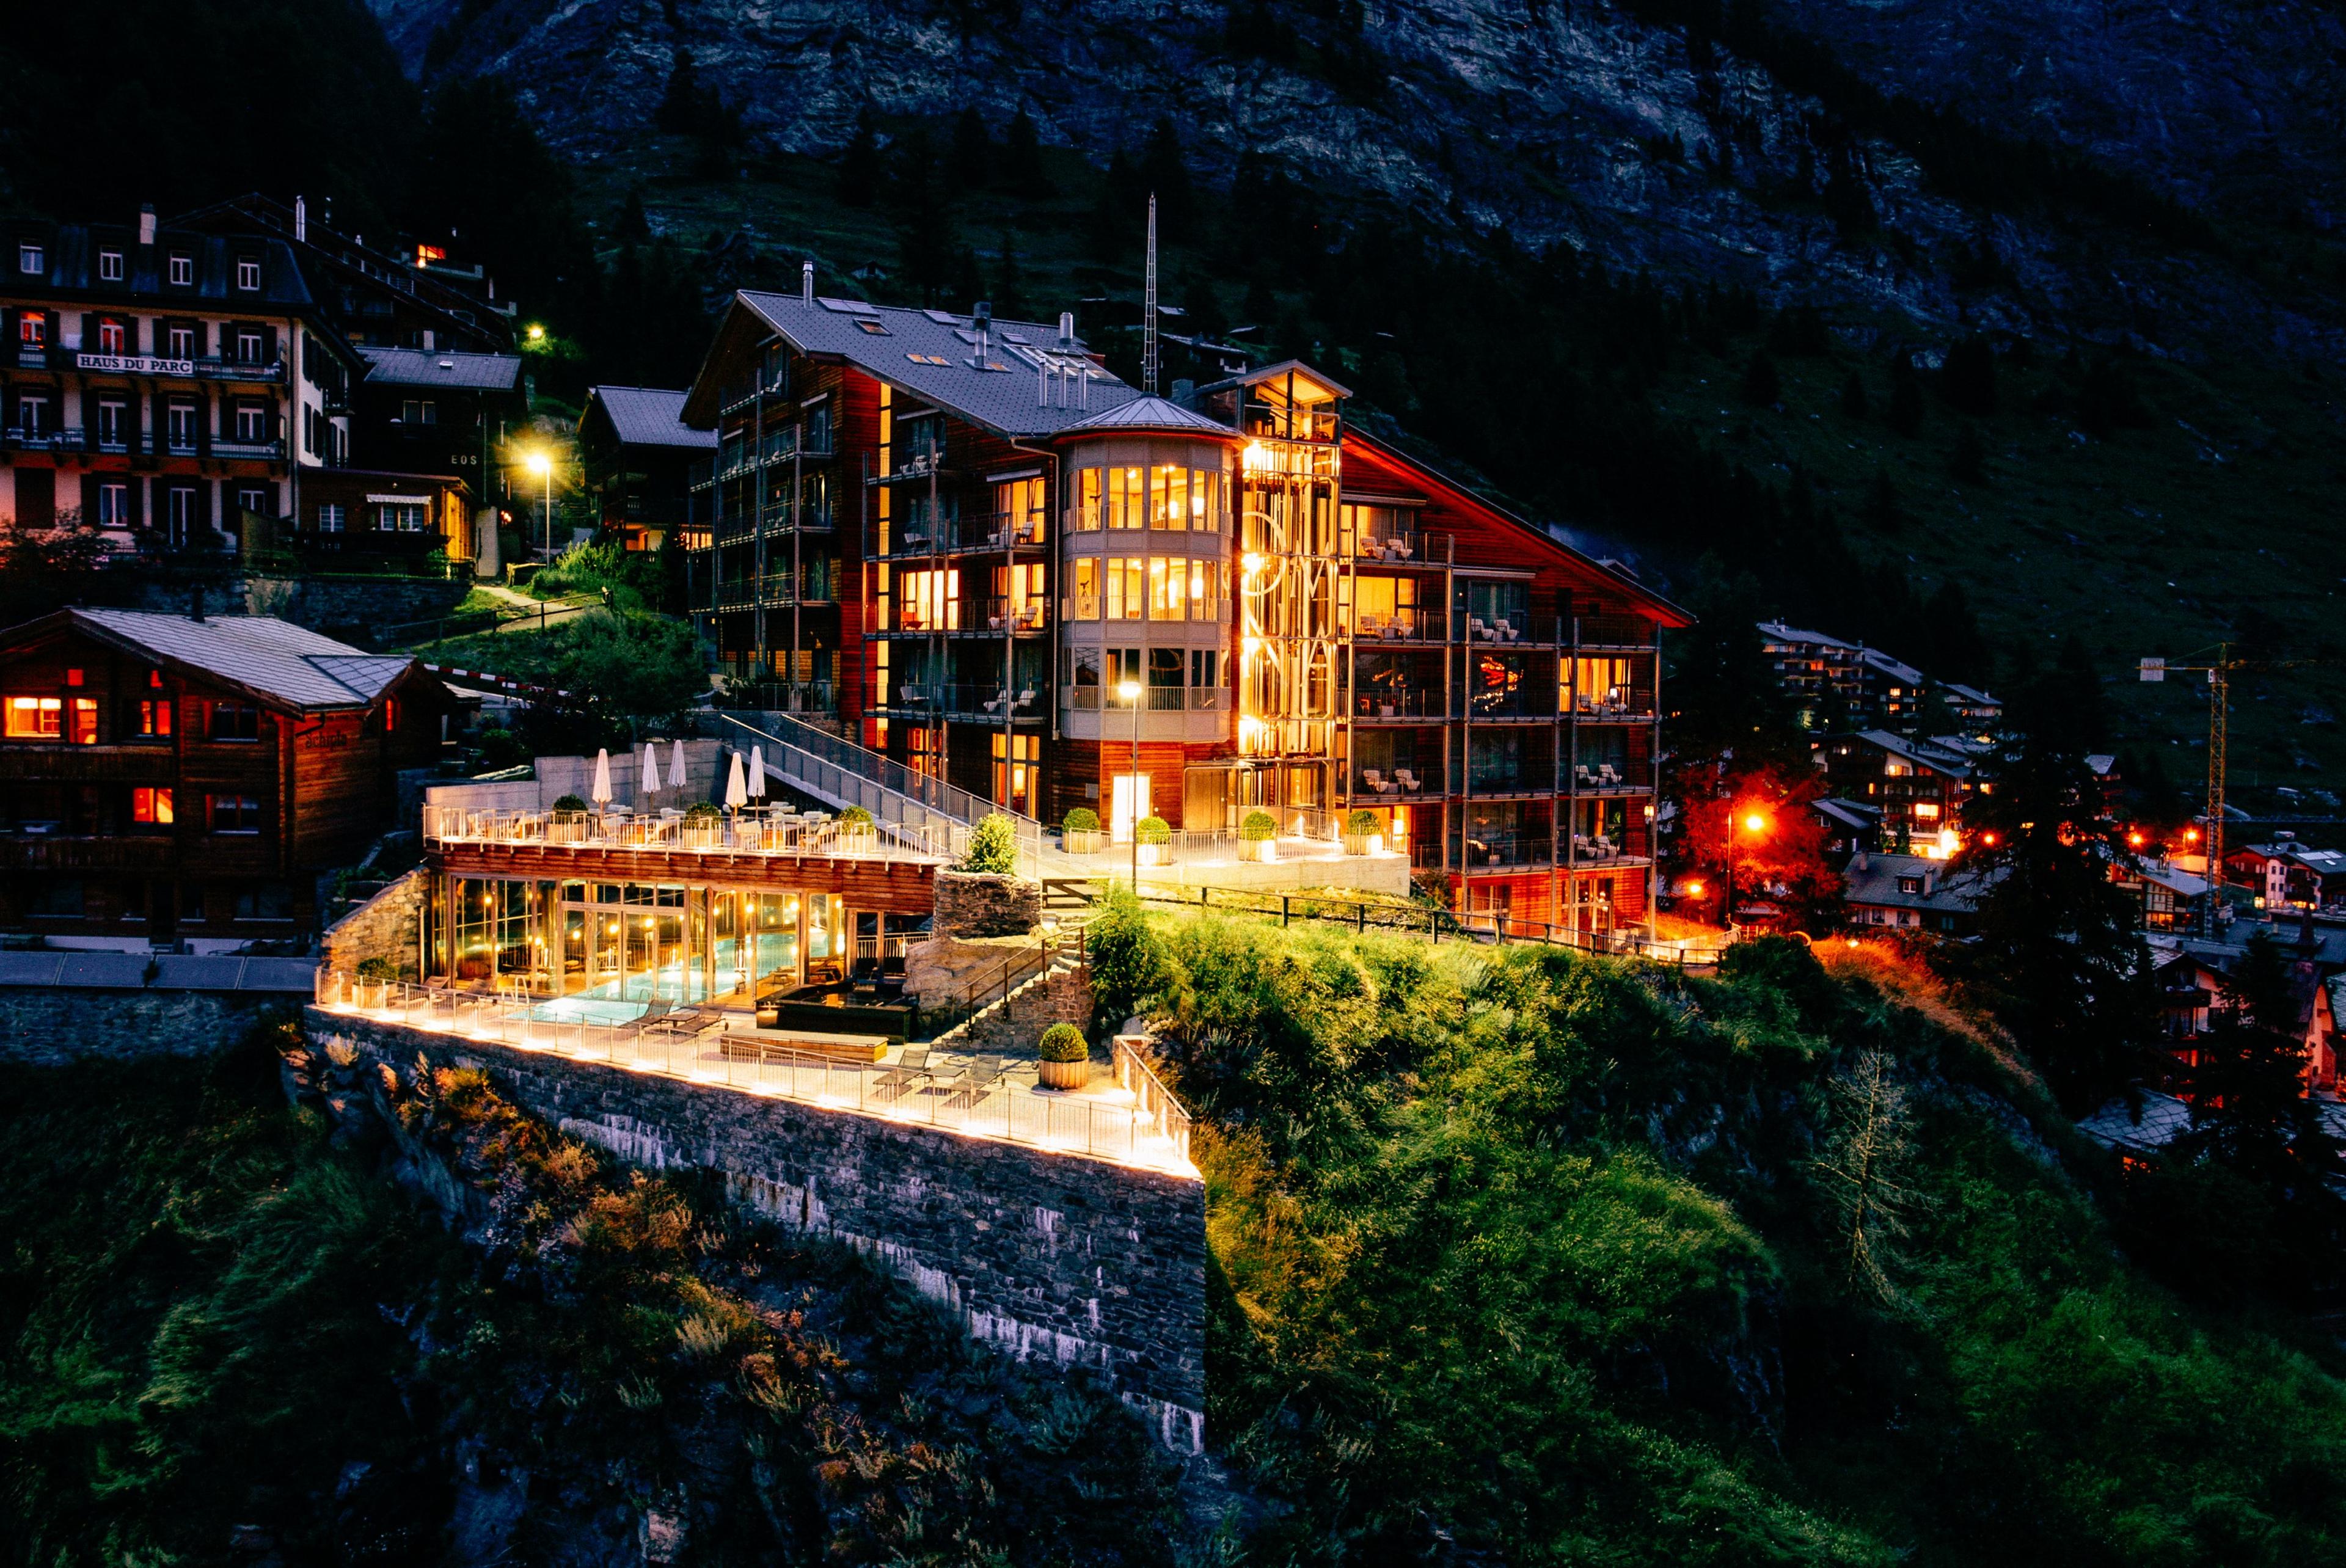 THE OMNIA - Hotel in Zermatt, Switzerland